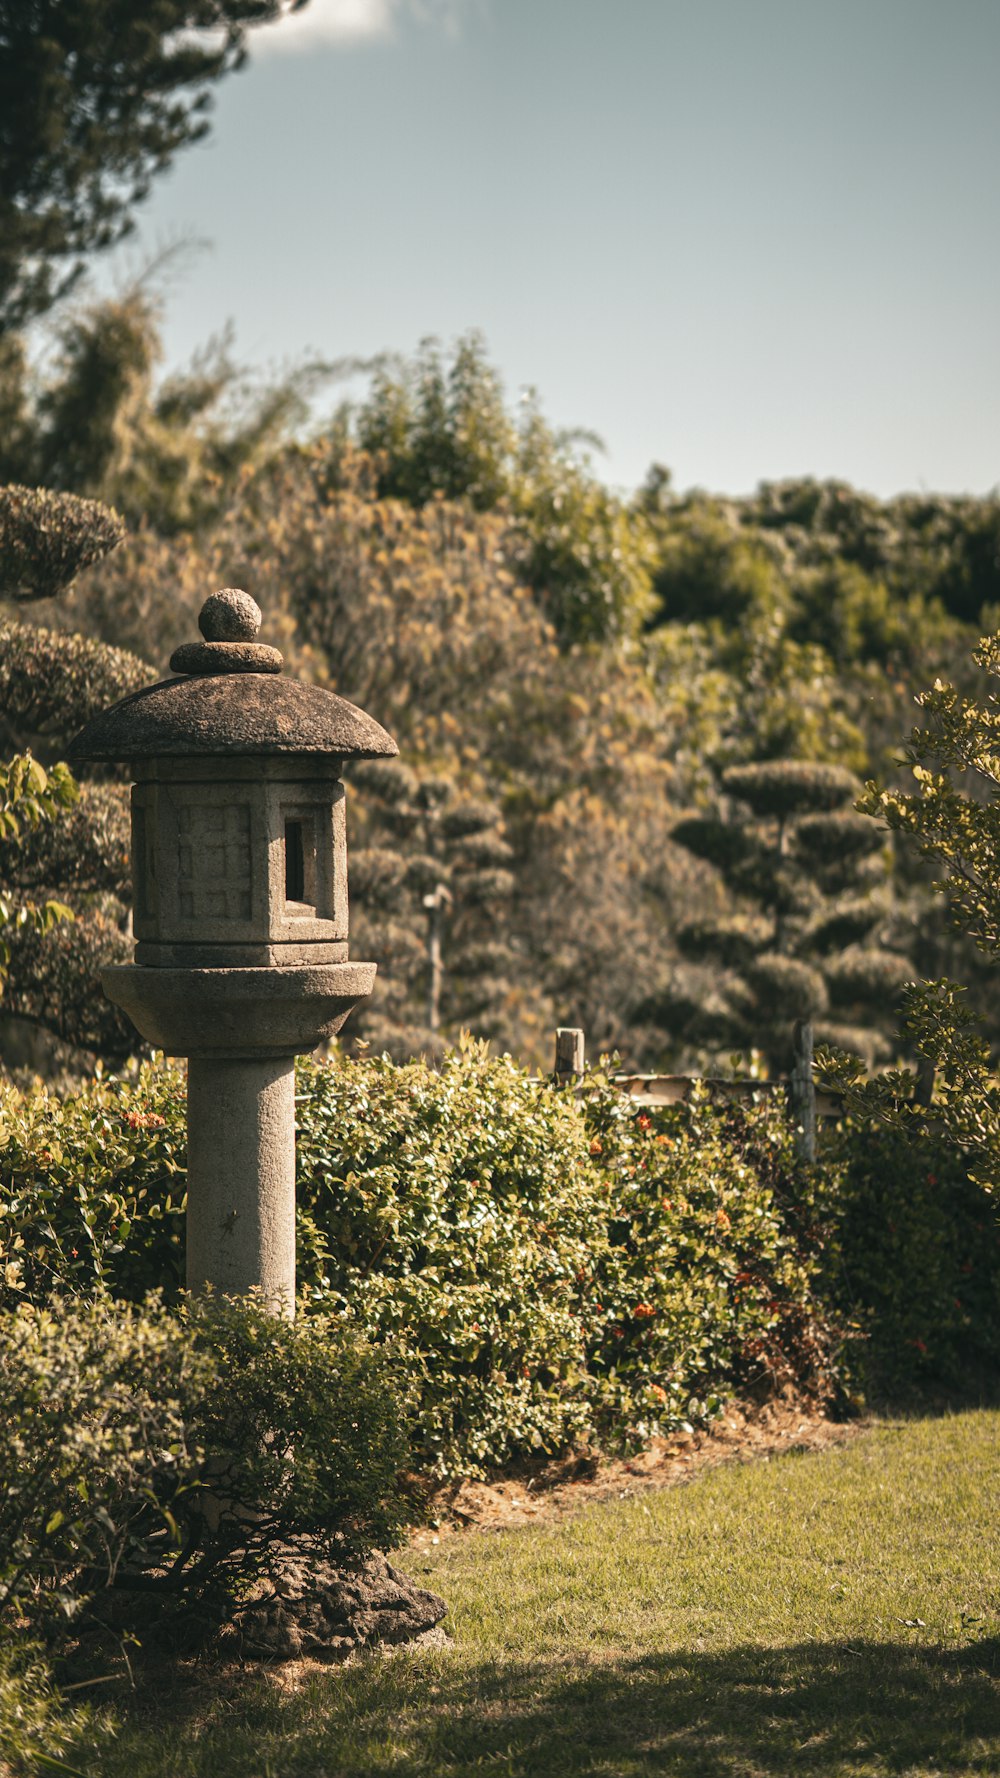 a bird house in the middle of a garden